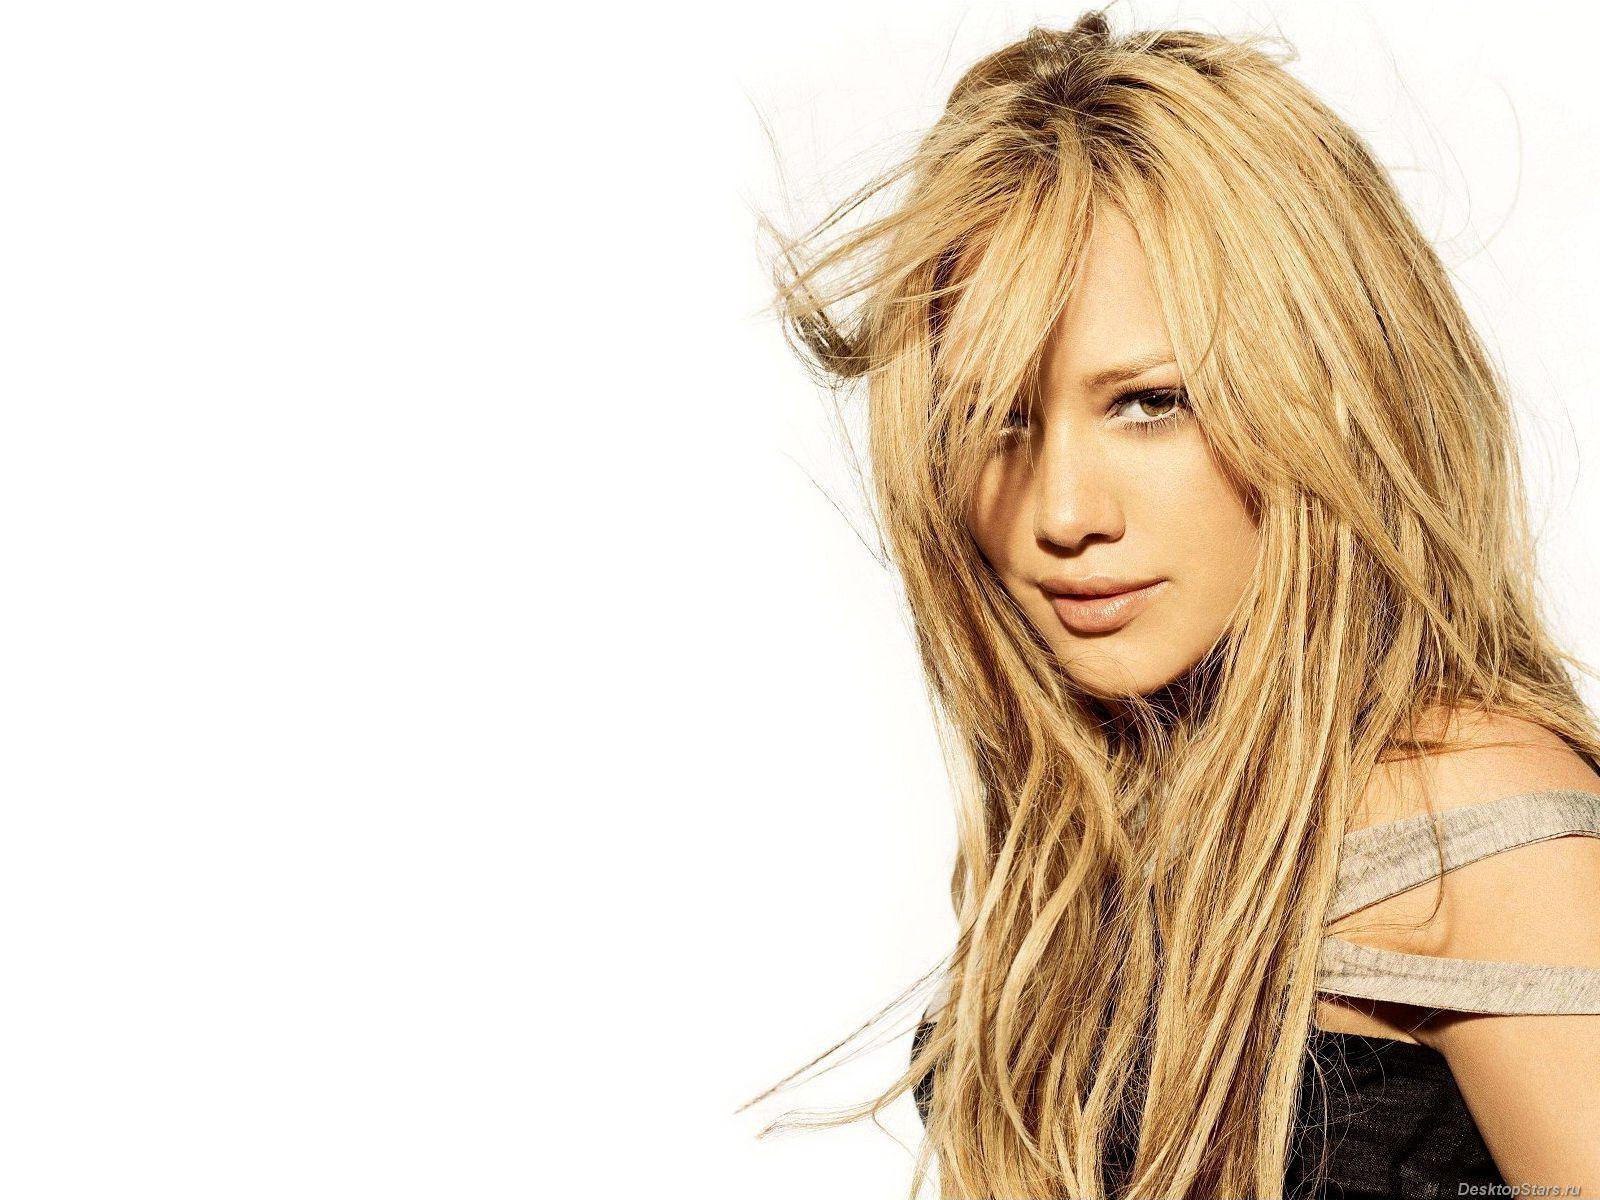 pic new posts: Hilary Duff HD Wallpaper 2560x1600